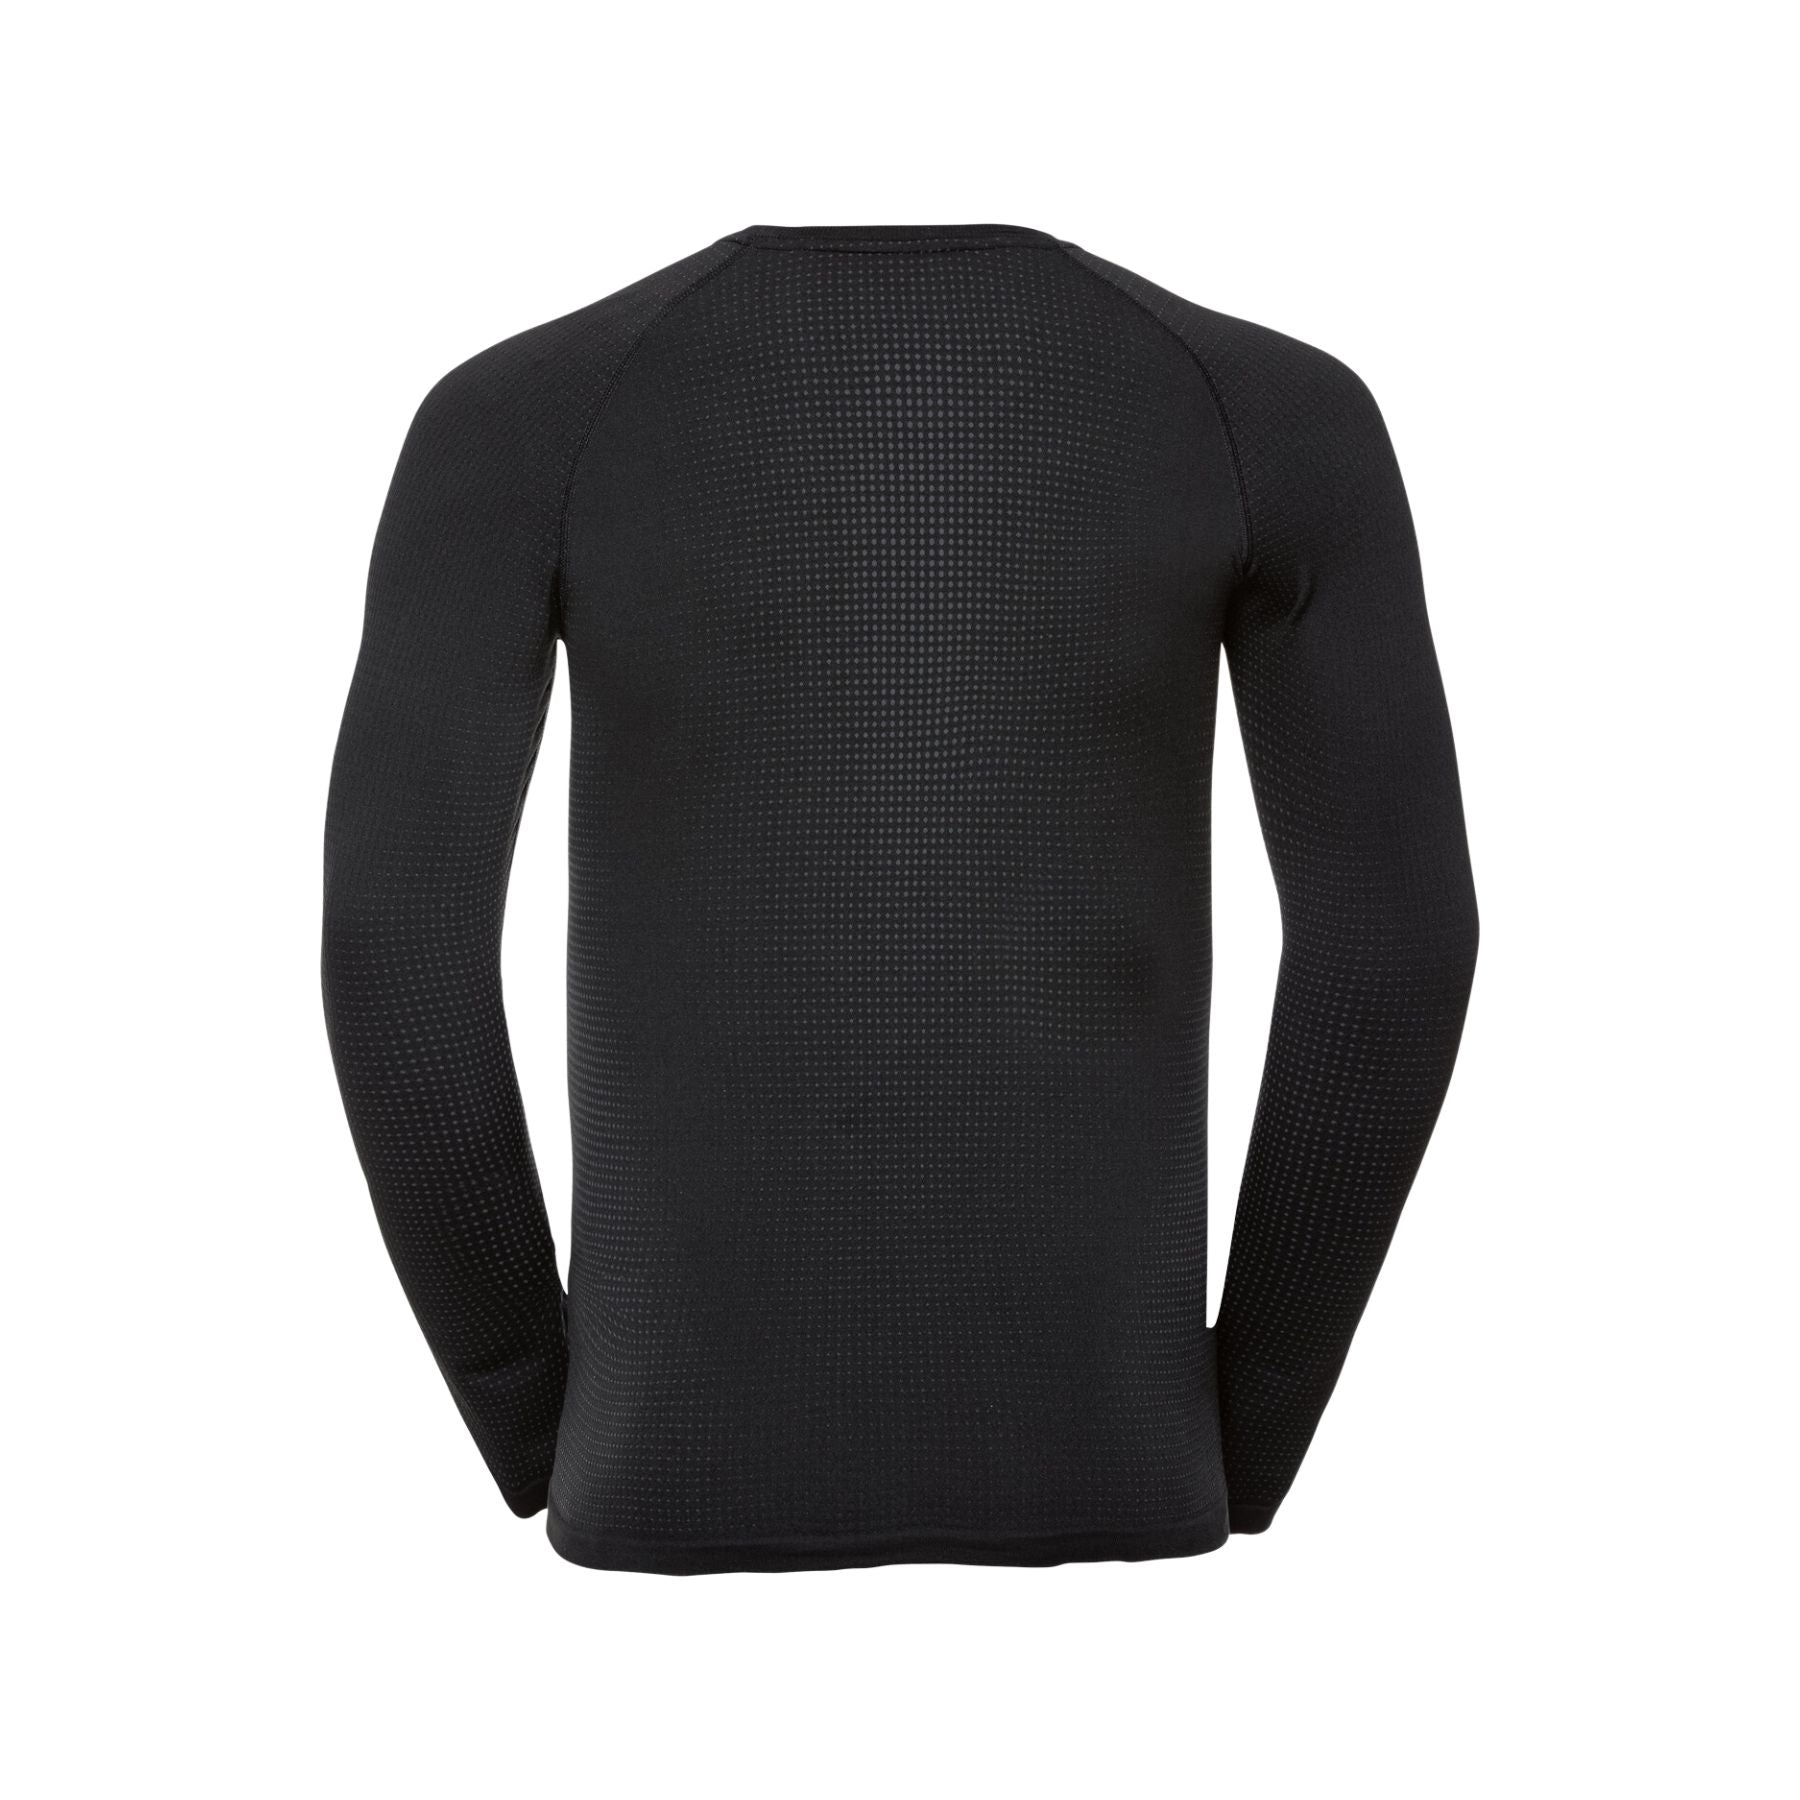 Odlo Men's Performance Warm Base Layer Top in Black/Graphite Grey